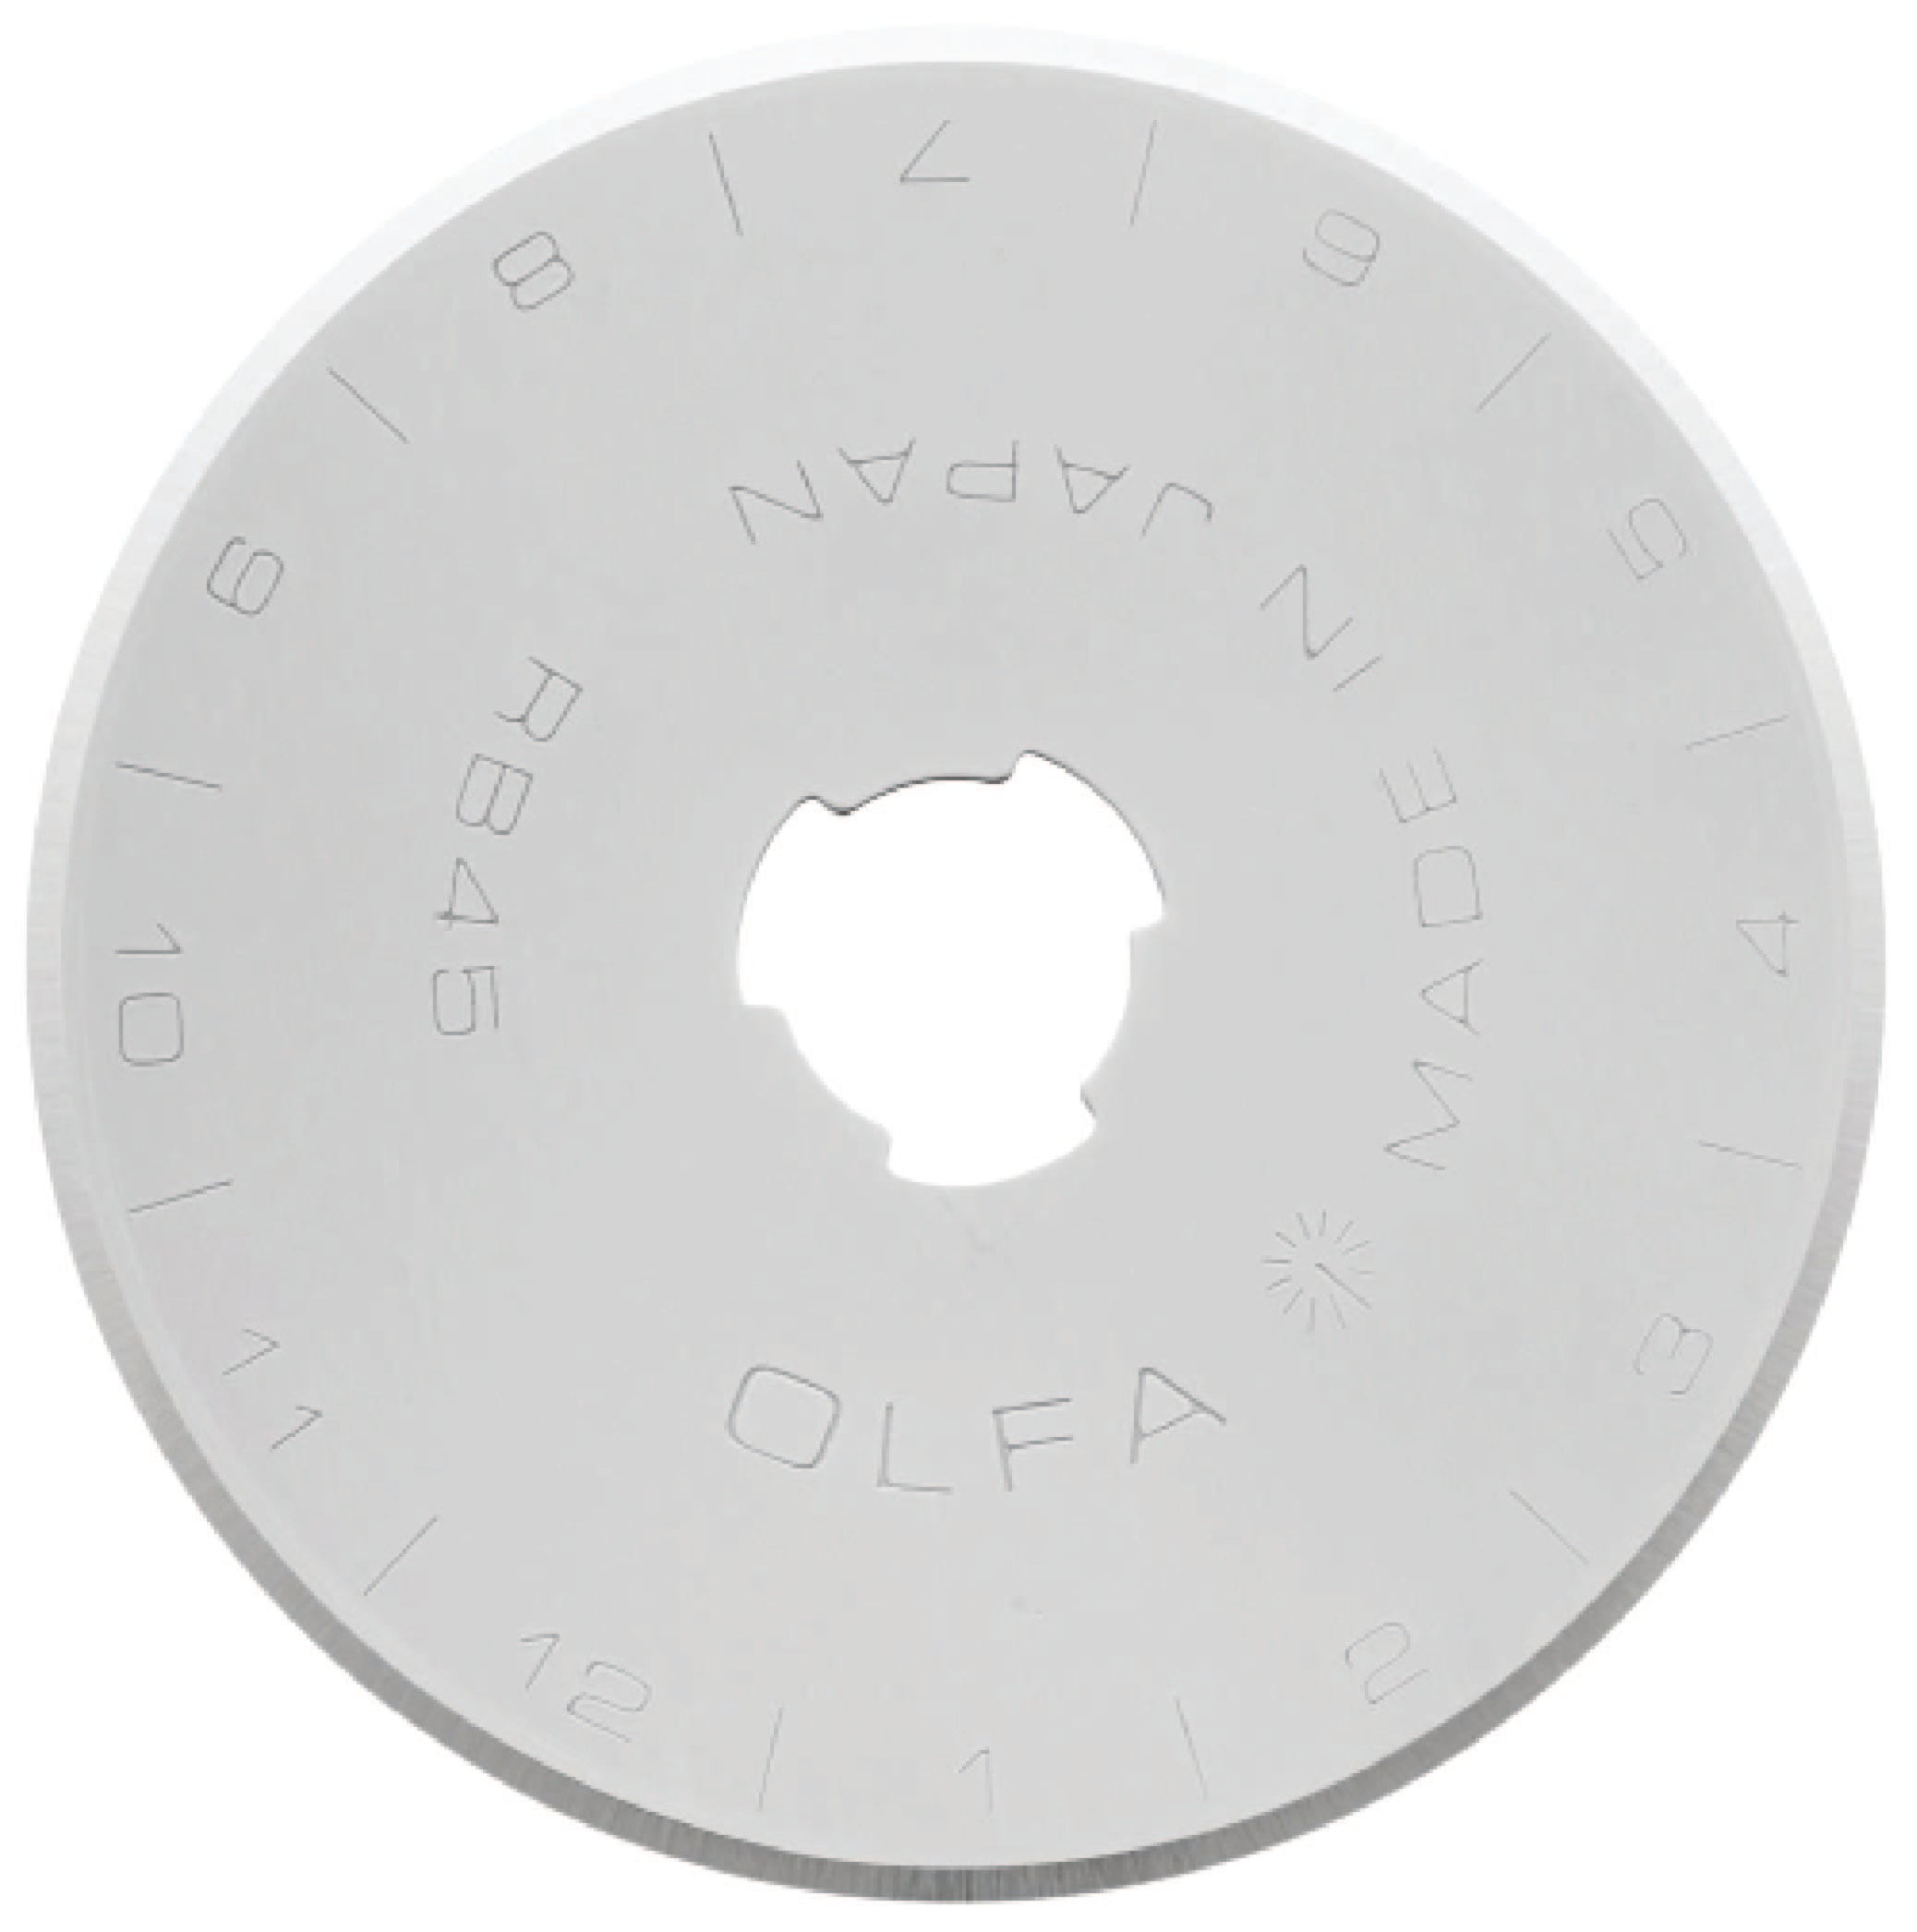 Ergonomic Rotary Cutter, 45mm by OLFA